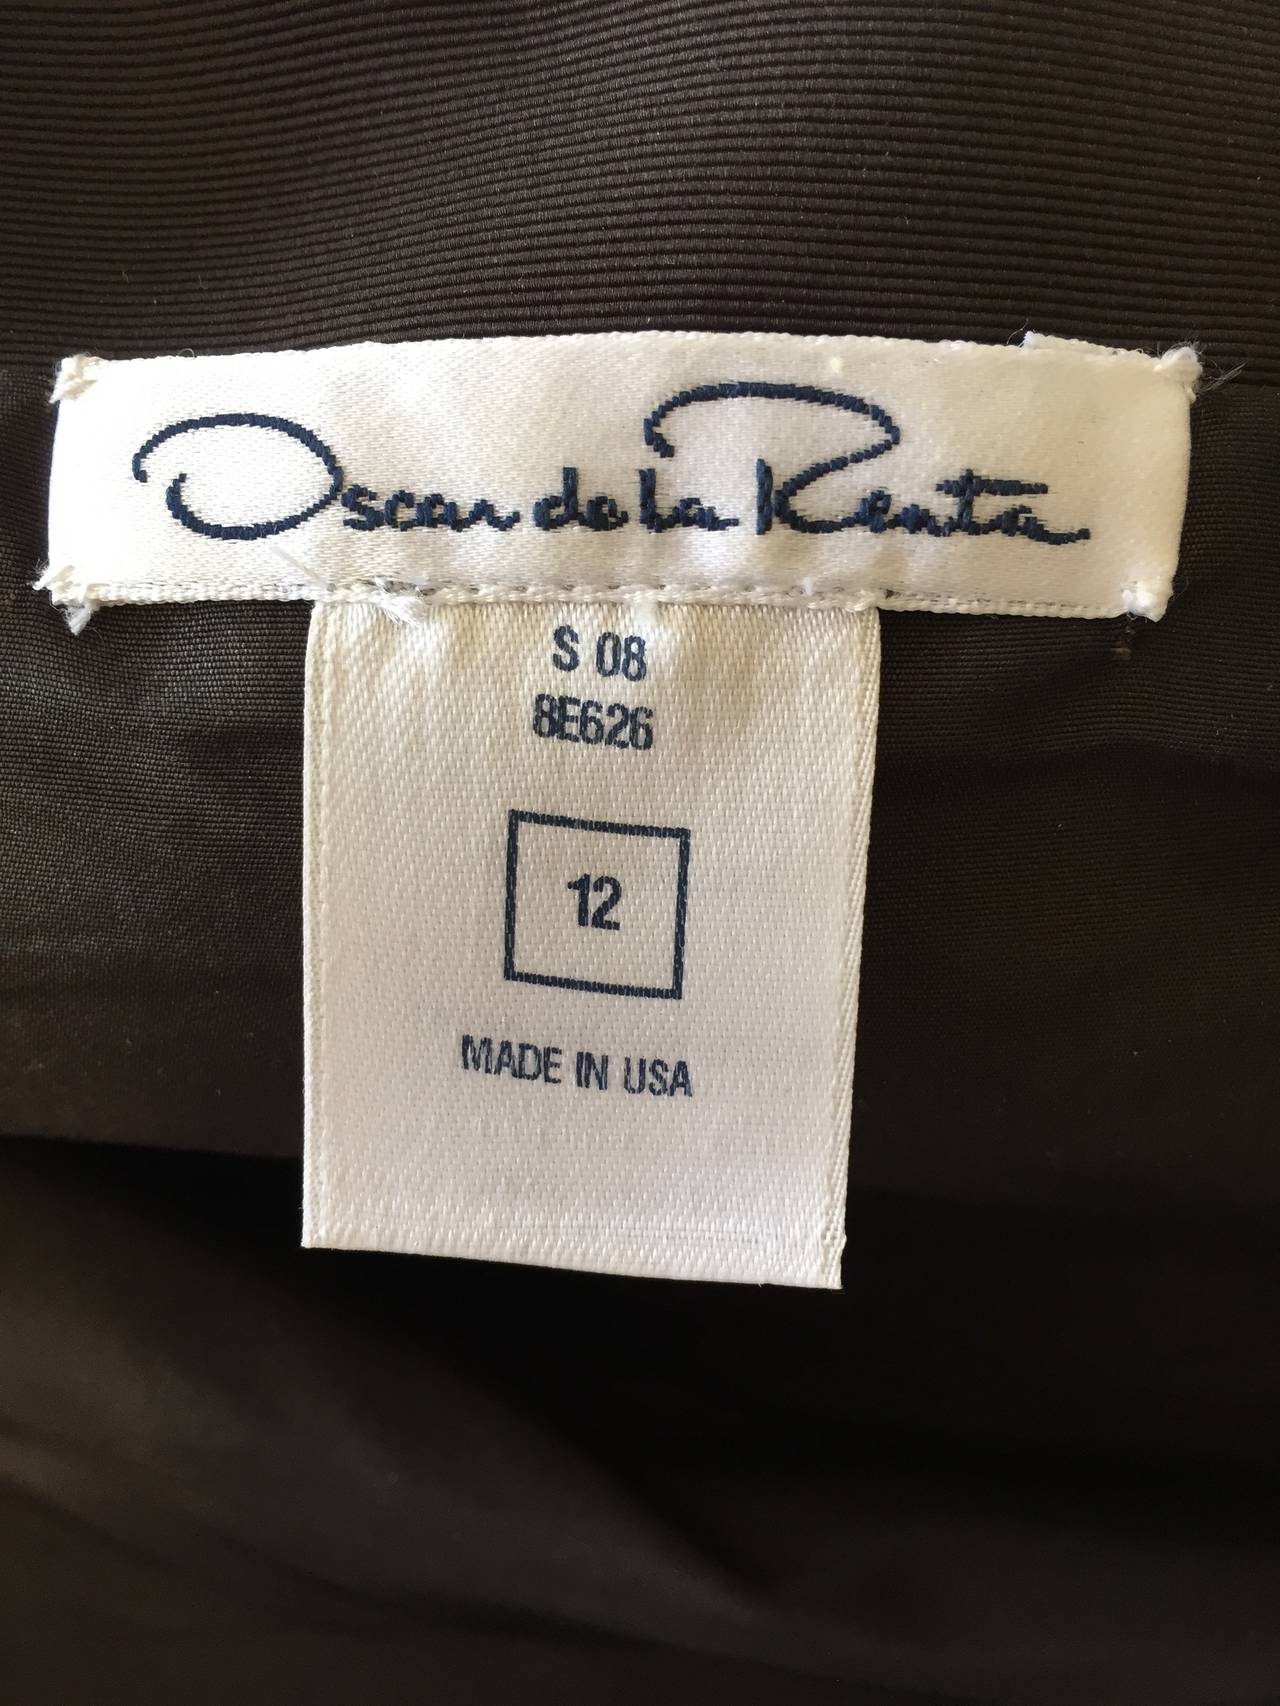 Oscar de la Renta Black & White Floral Embroidered Dress Size 12 4